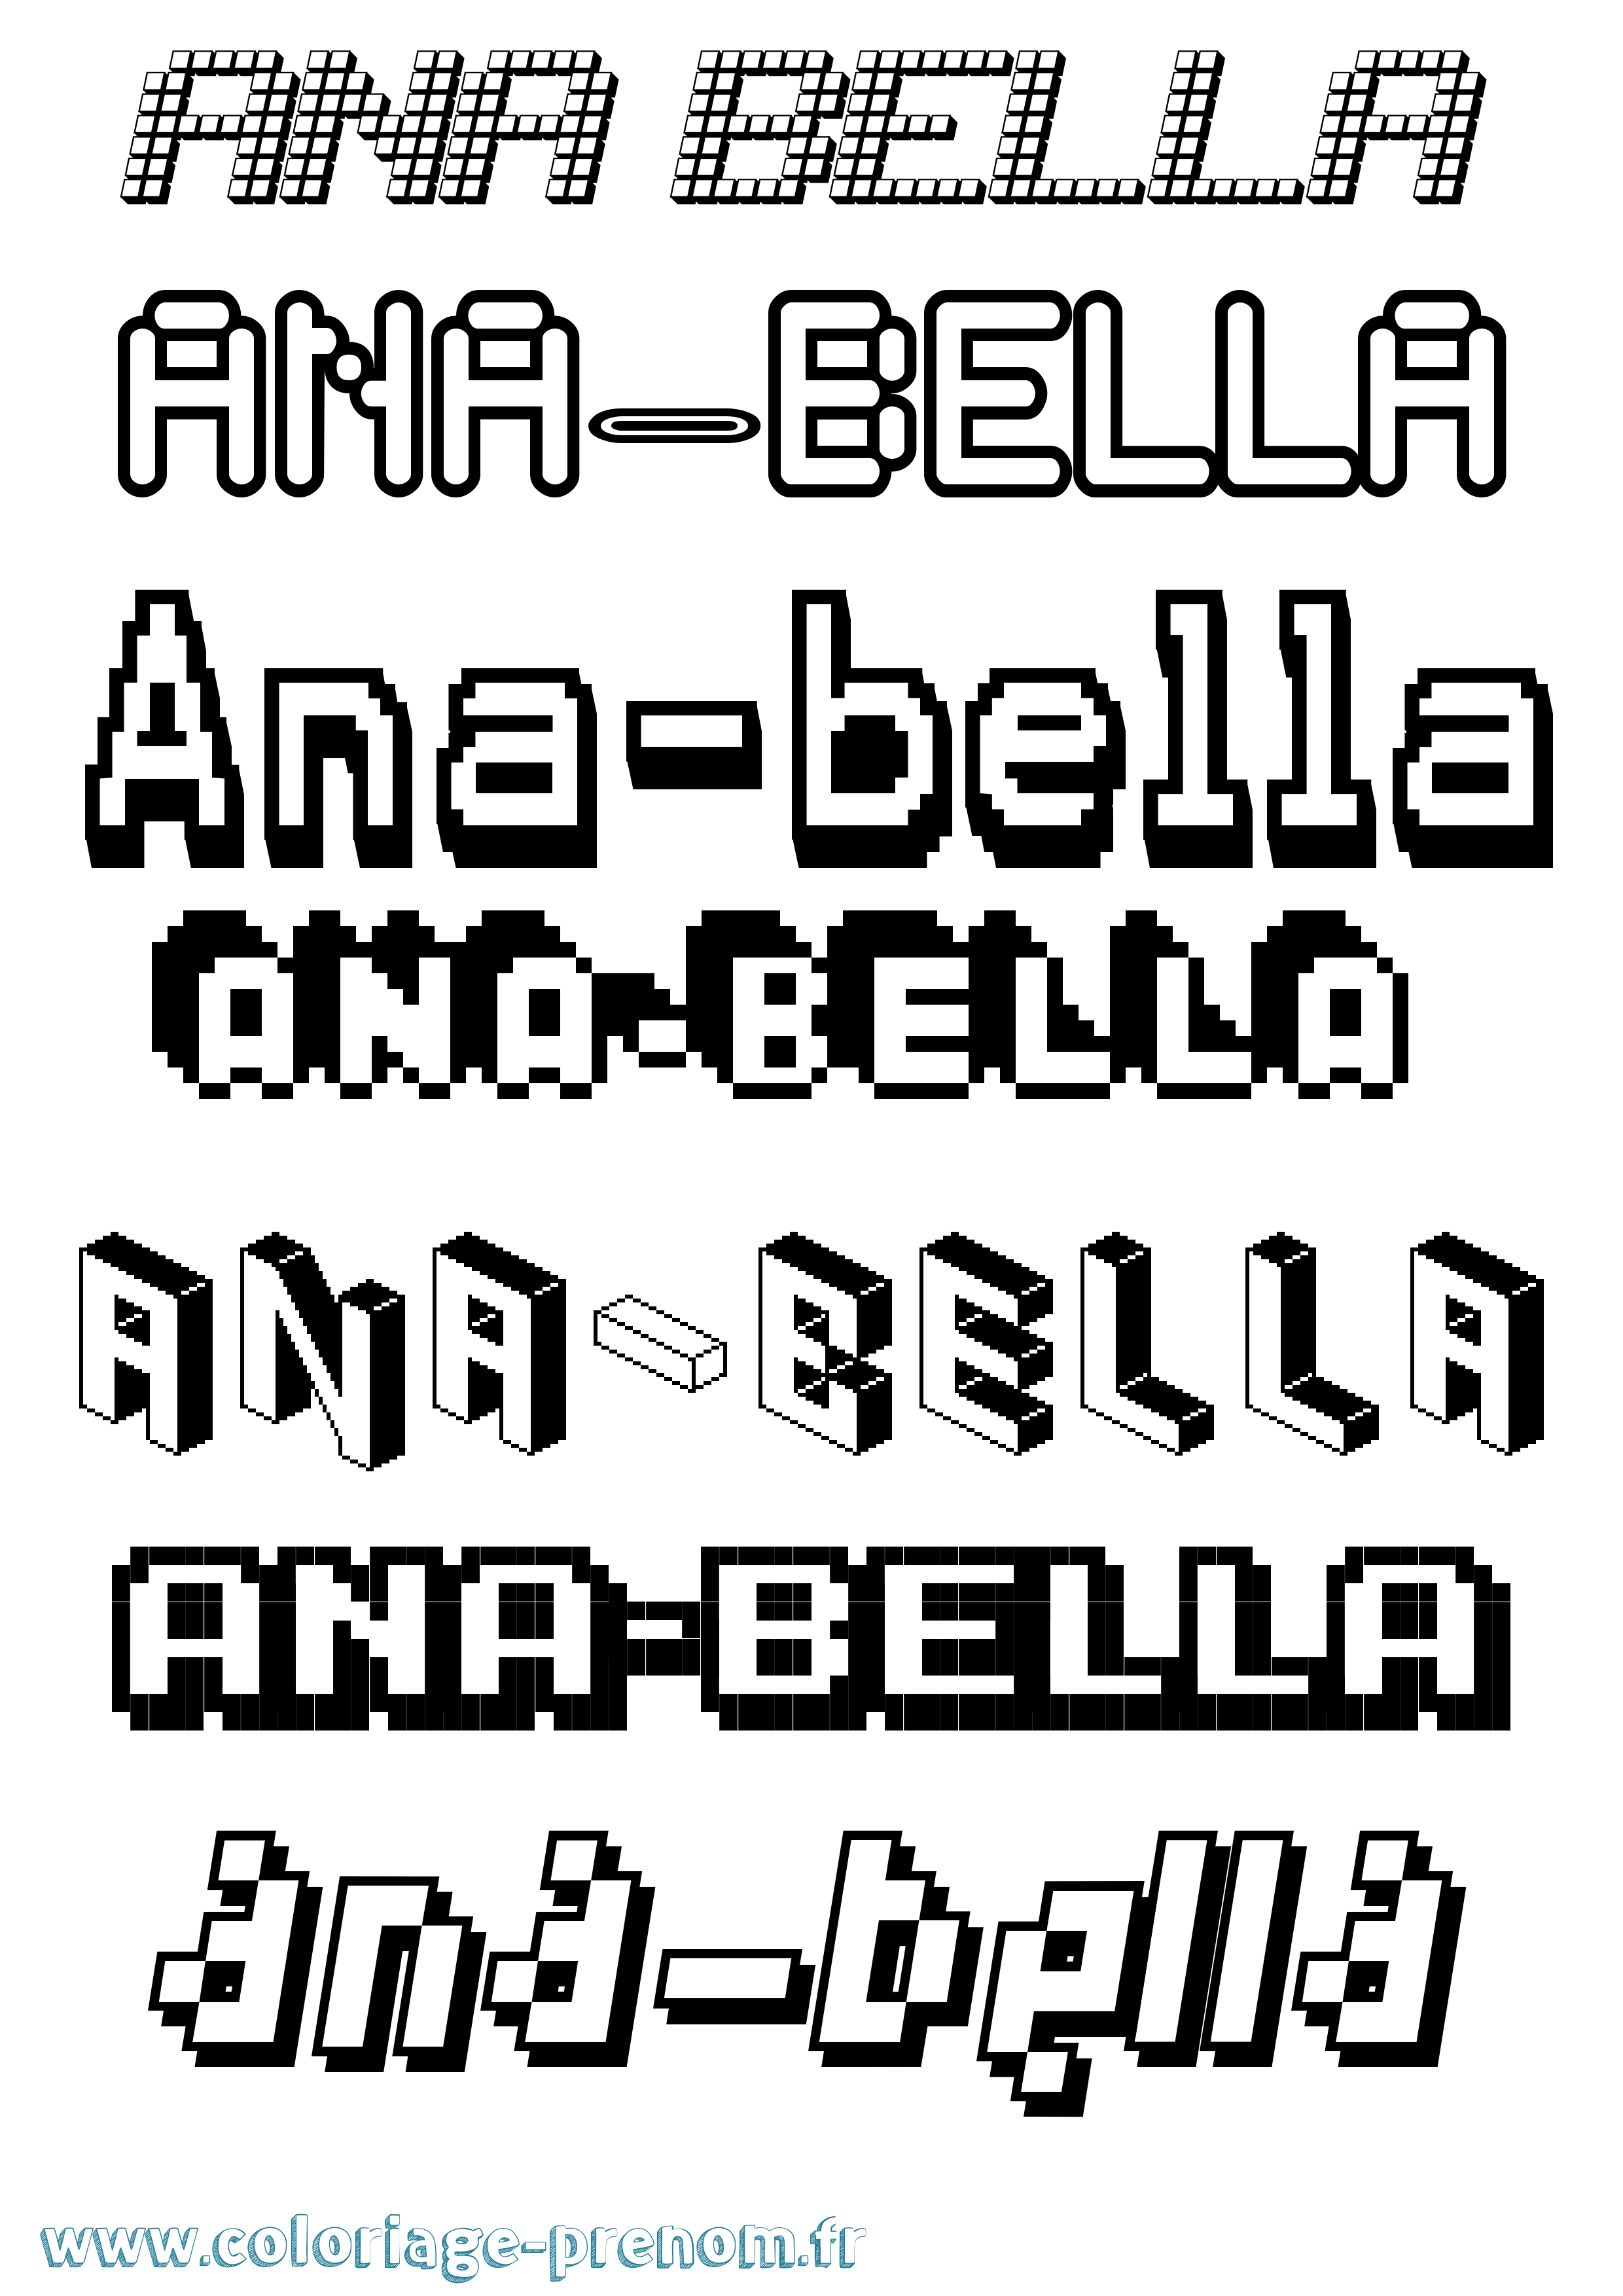 Coloriage prénom Ana-Bella Pixel